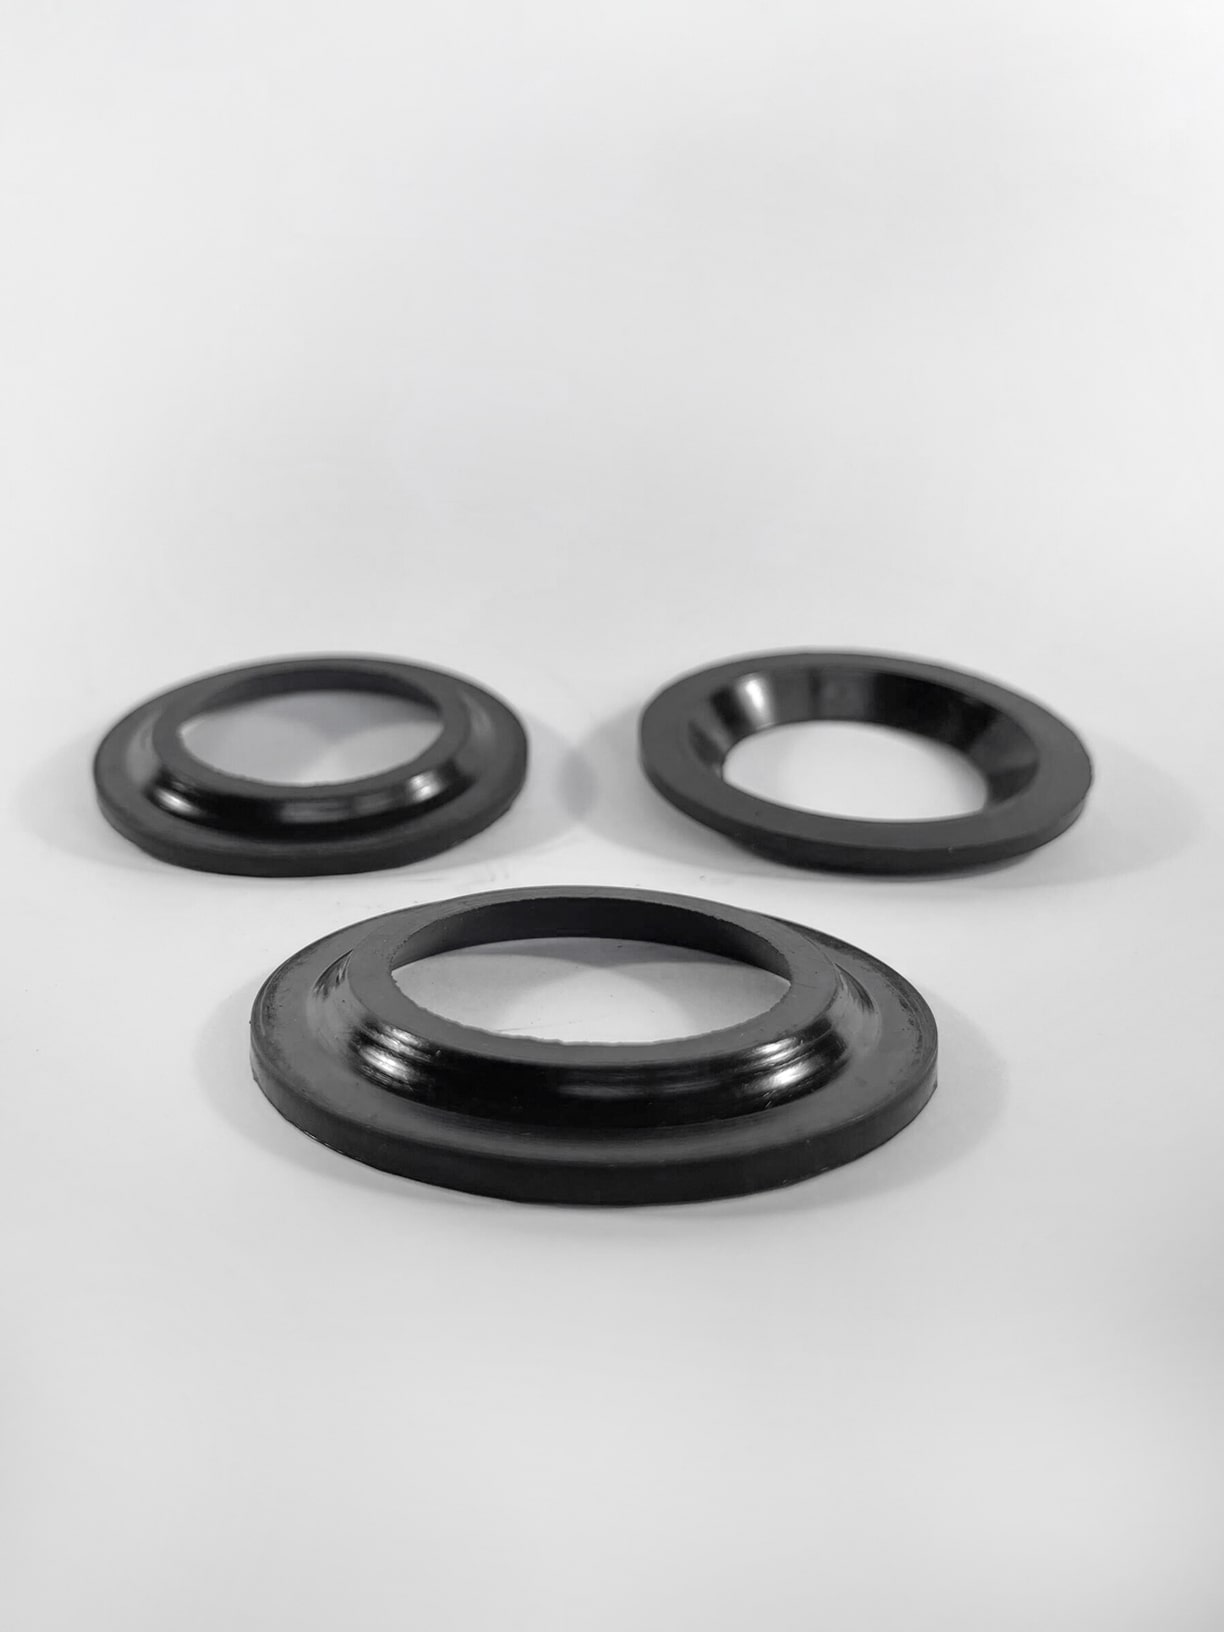 Auto Tech Products - Industrial Rubber - Tehnoguma - Premium Quality Sealants